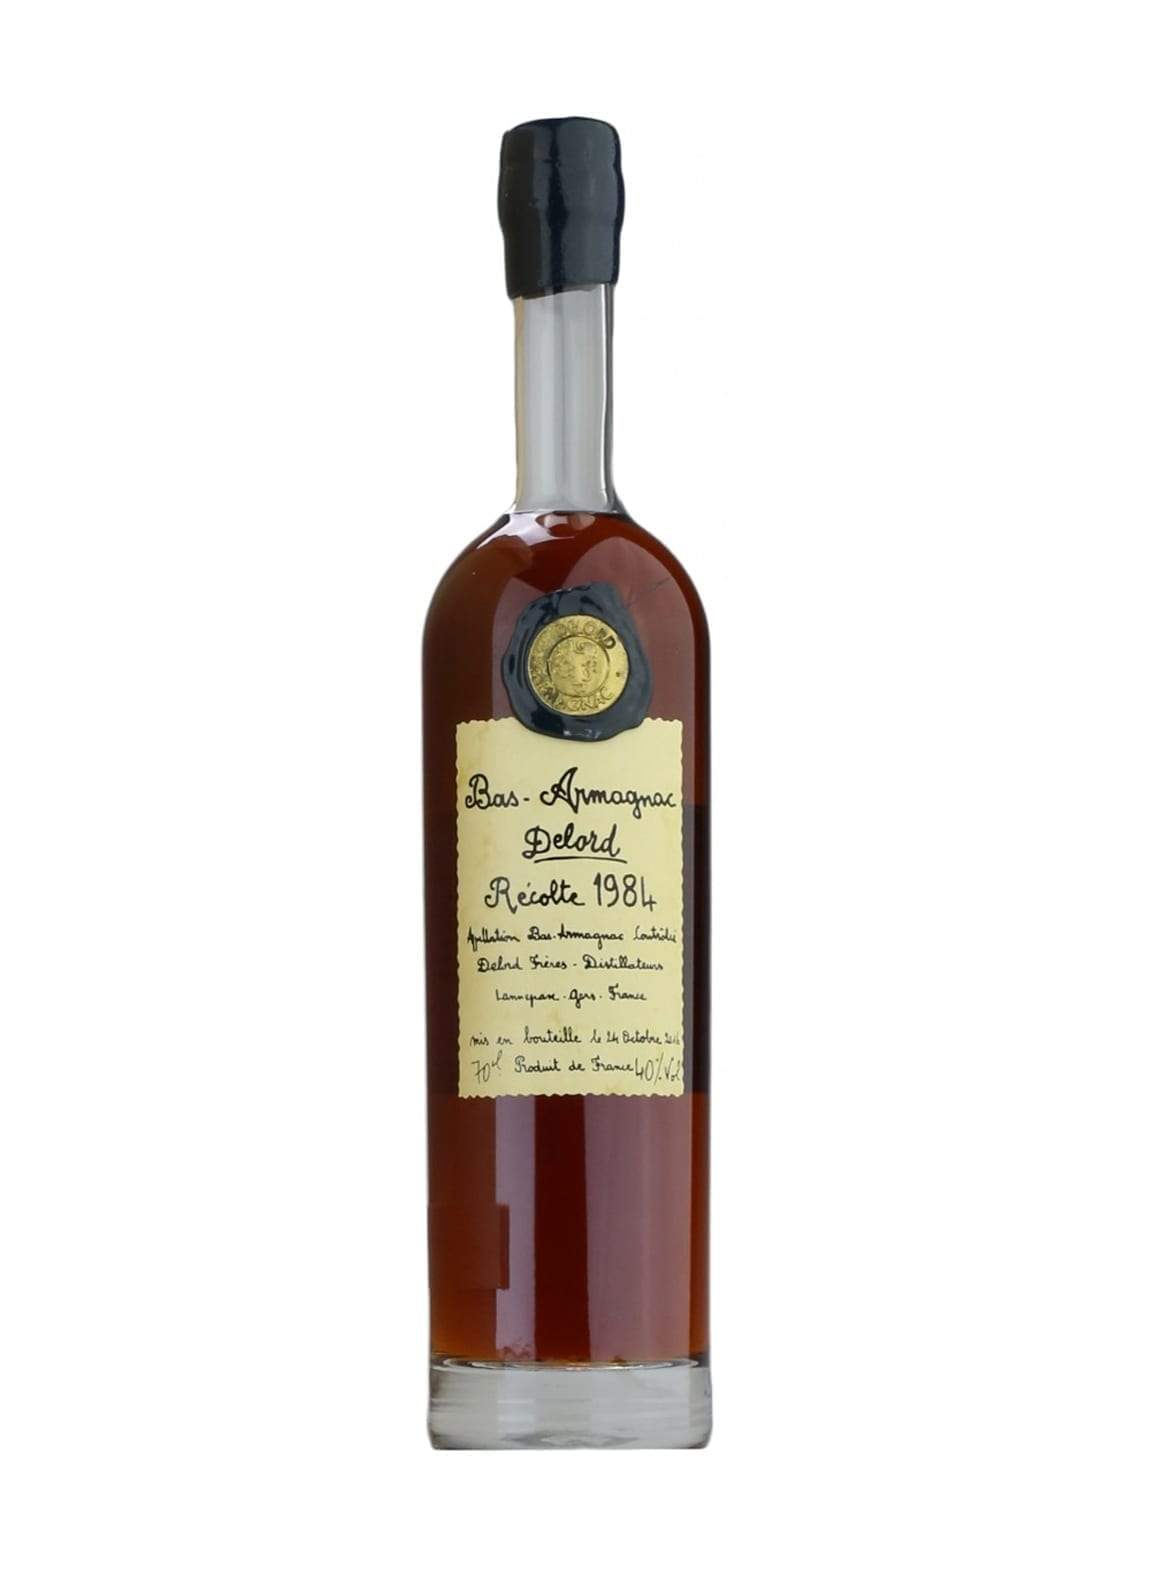 Delord 1984 Bas Armagnac 40% 700ml | Brandy | Shop online at Spirits of France